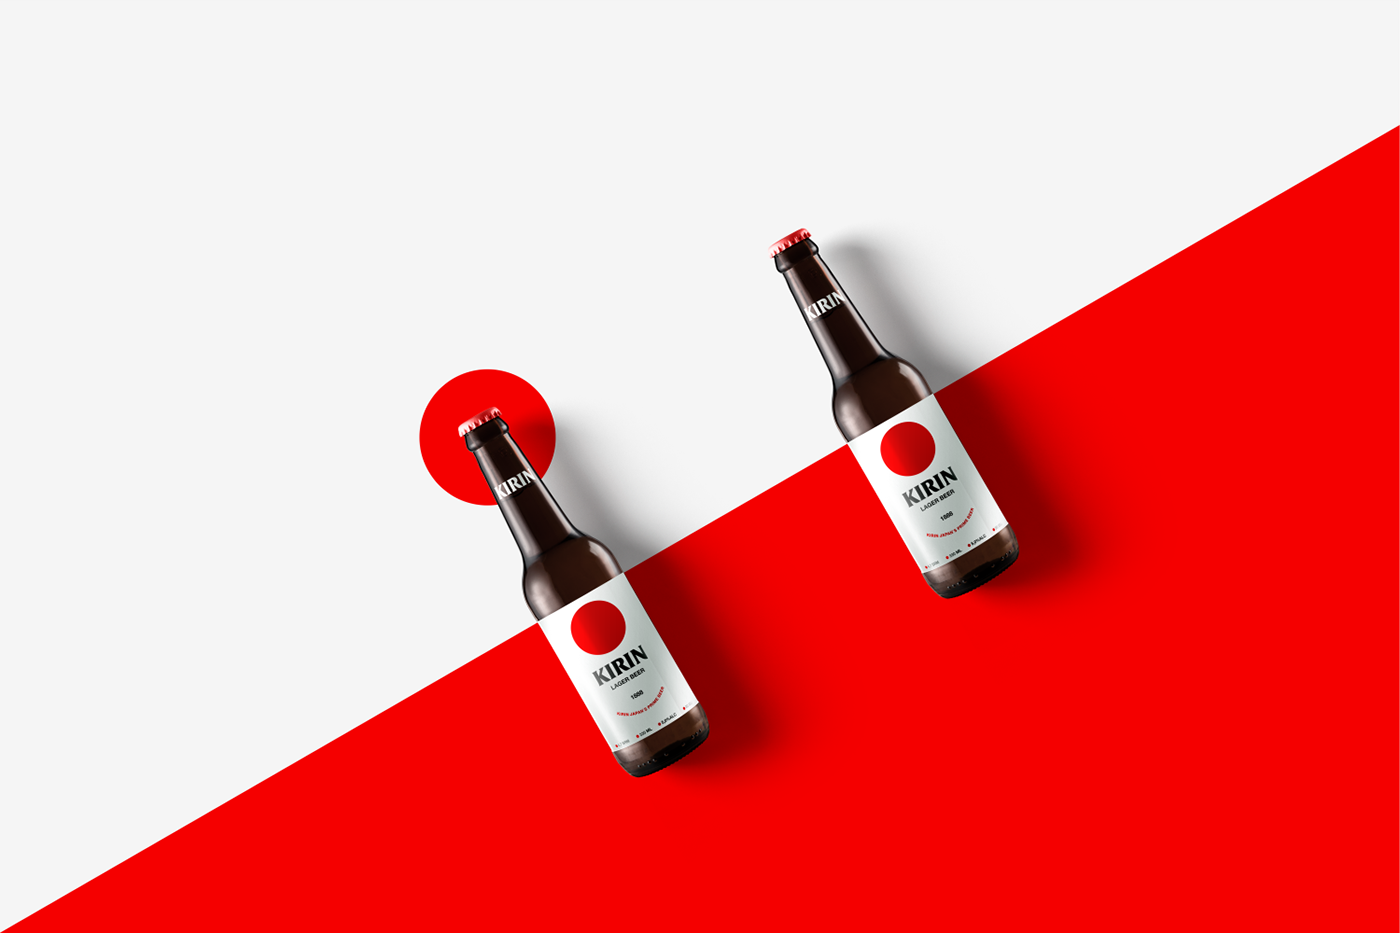 Kirin beer Label brand lapan red Packaging bottle circle concept